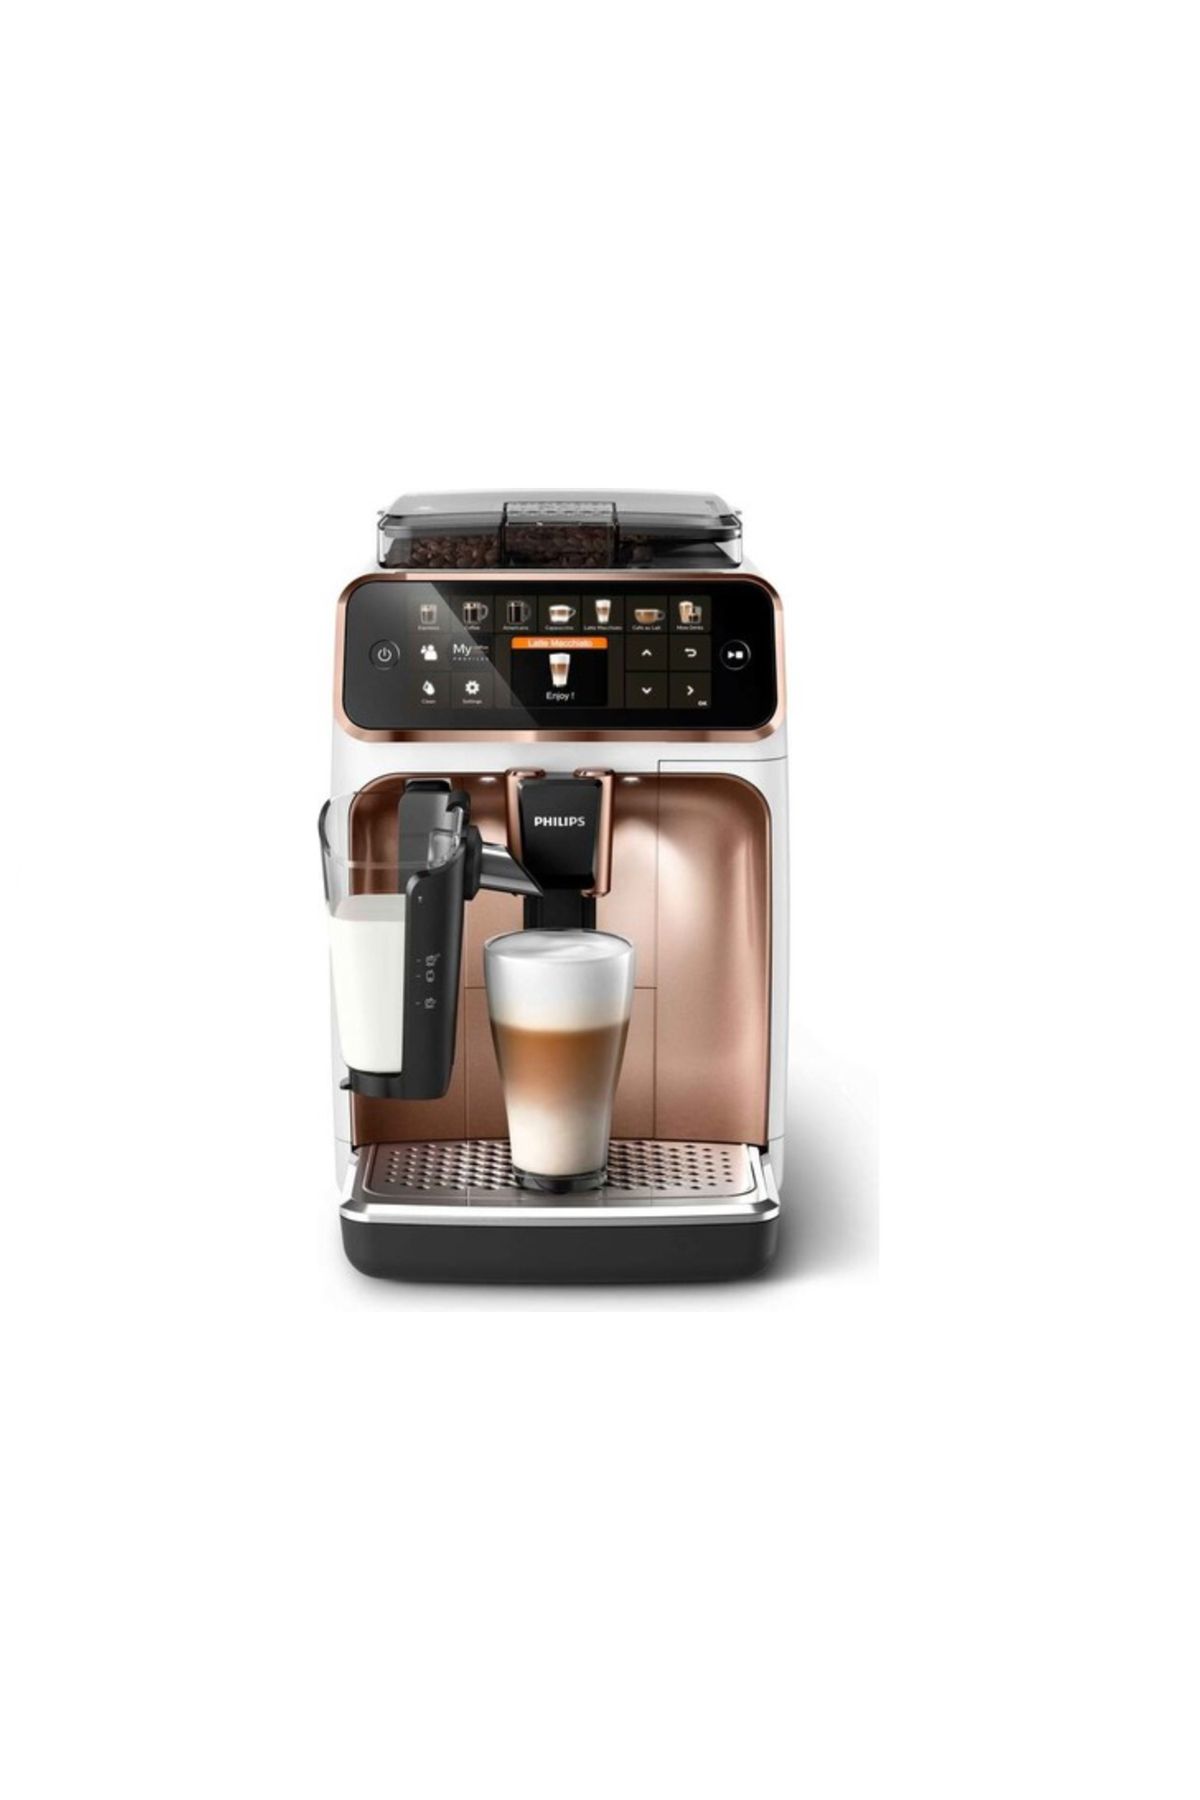 Philips Lattego Tam Otomatik Kahve ve Espresso Makinesi